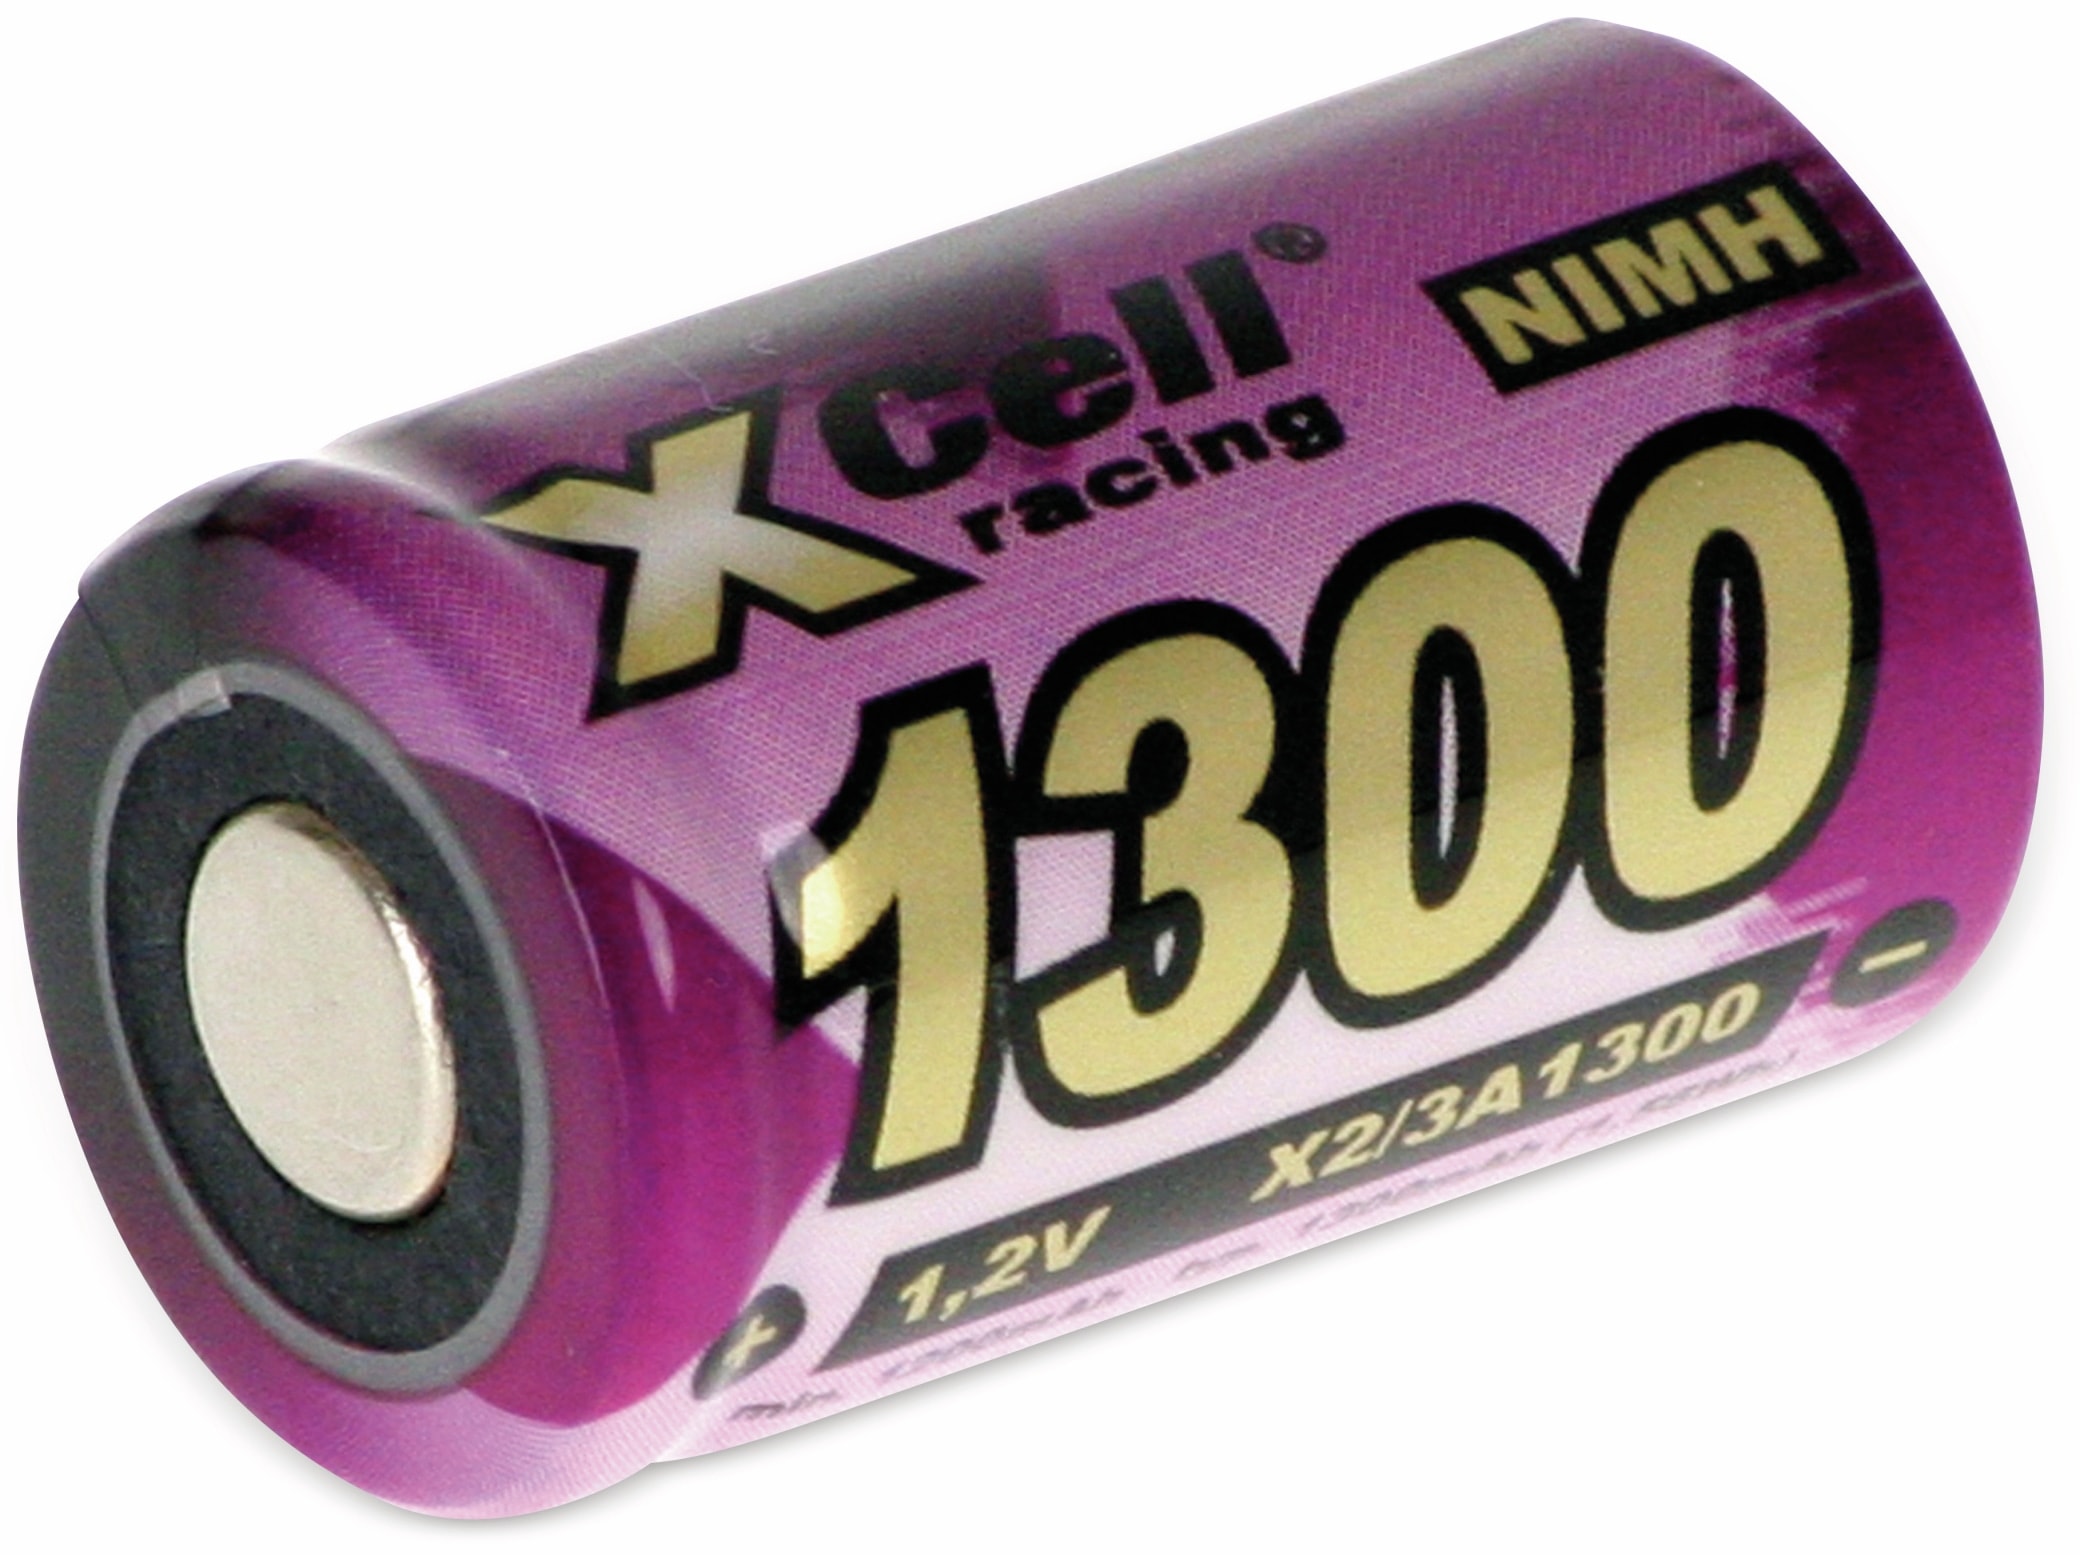 XCELL NiMH-Akku, Industriezelle, 2/3 A, Flat-Top, 28,5x17mm, 1,2V/1300mAh